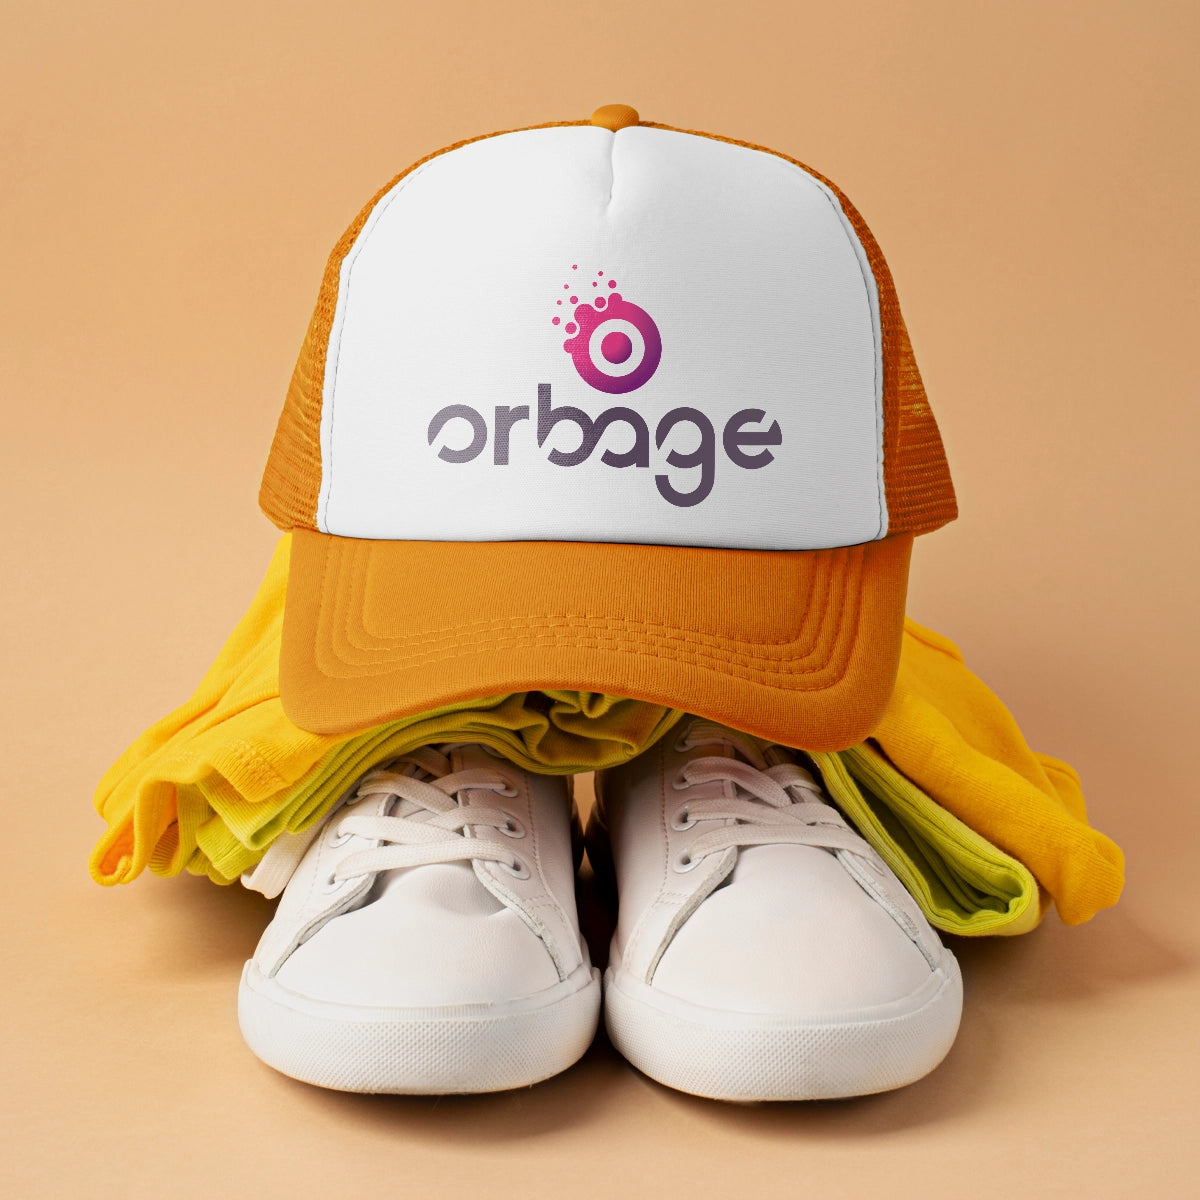 Orbage.com